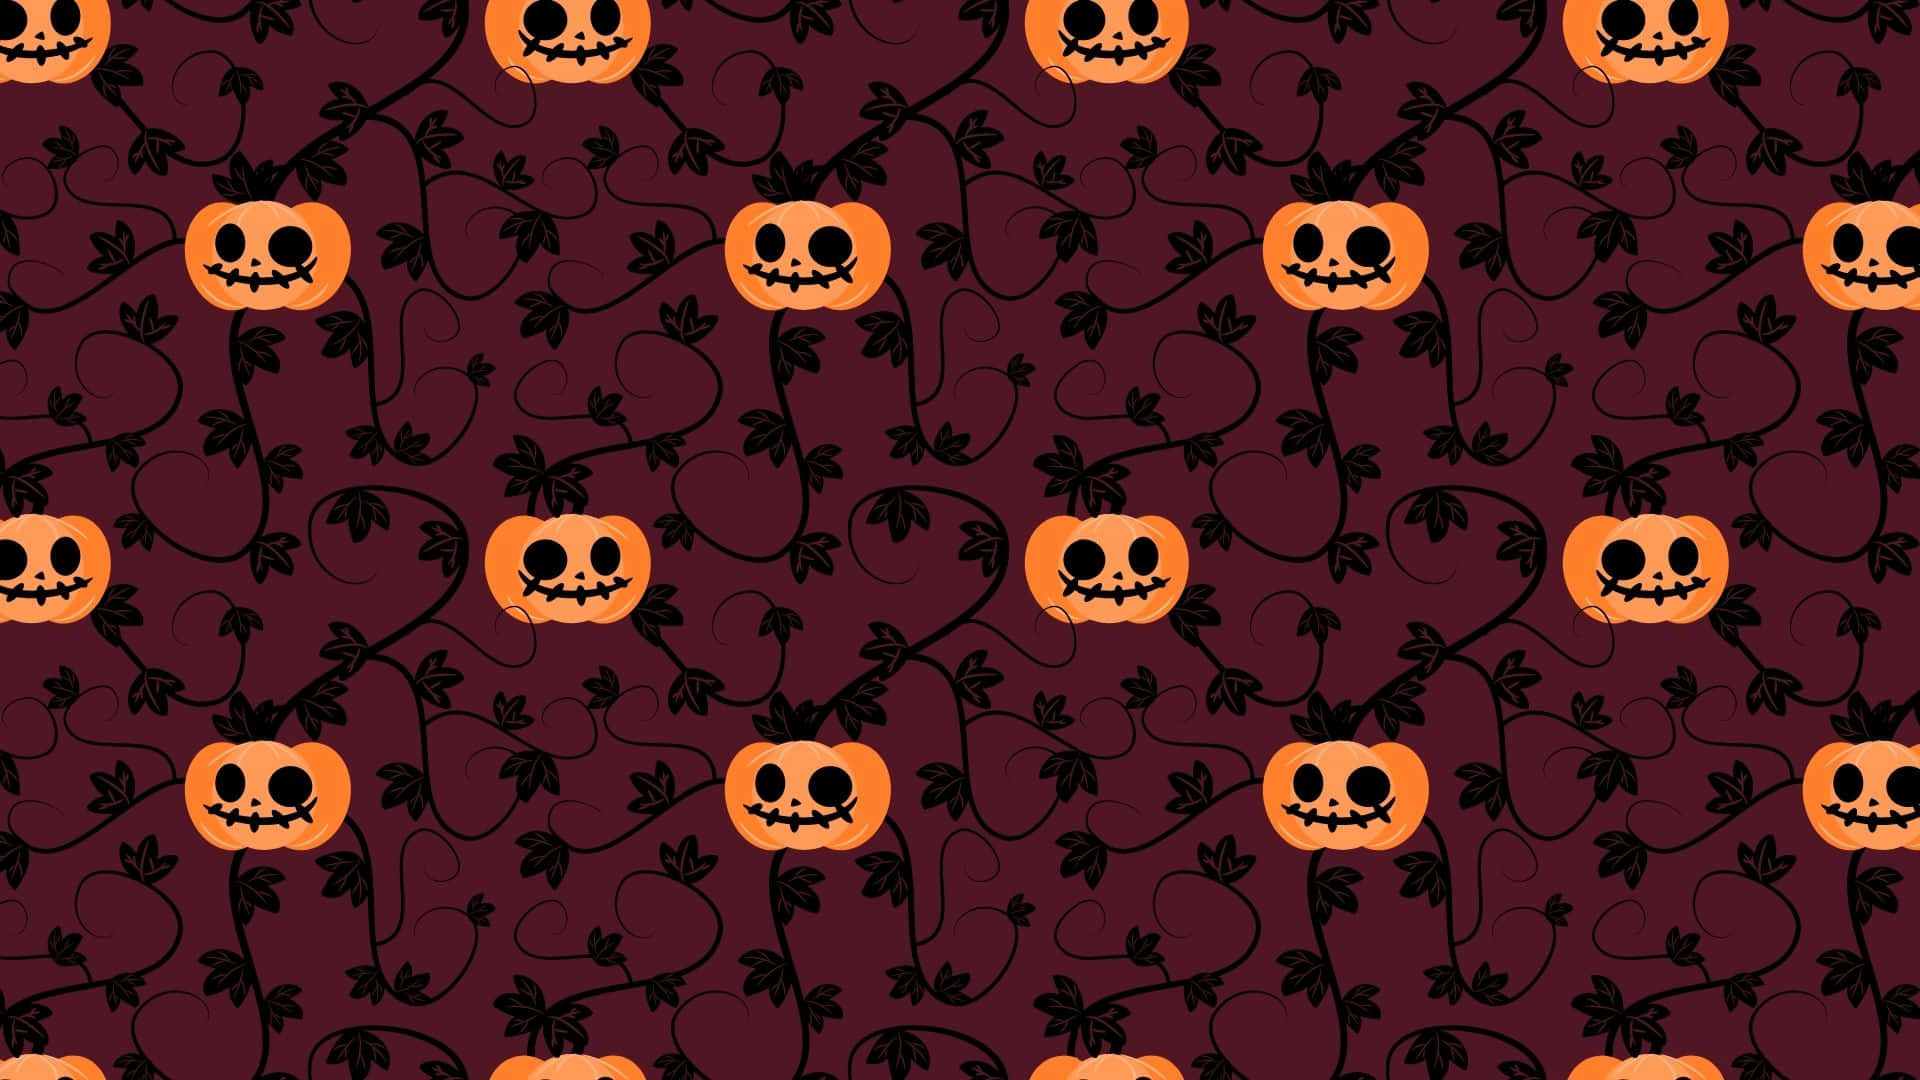 Adorable Smiling Jack-o'-Lantern in a Fall Harvest Scene Wallpaper